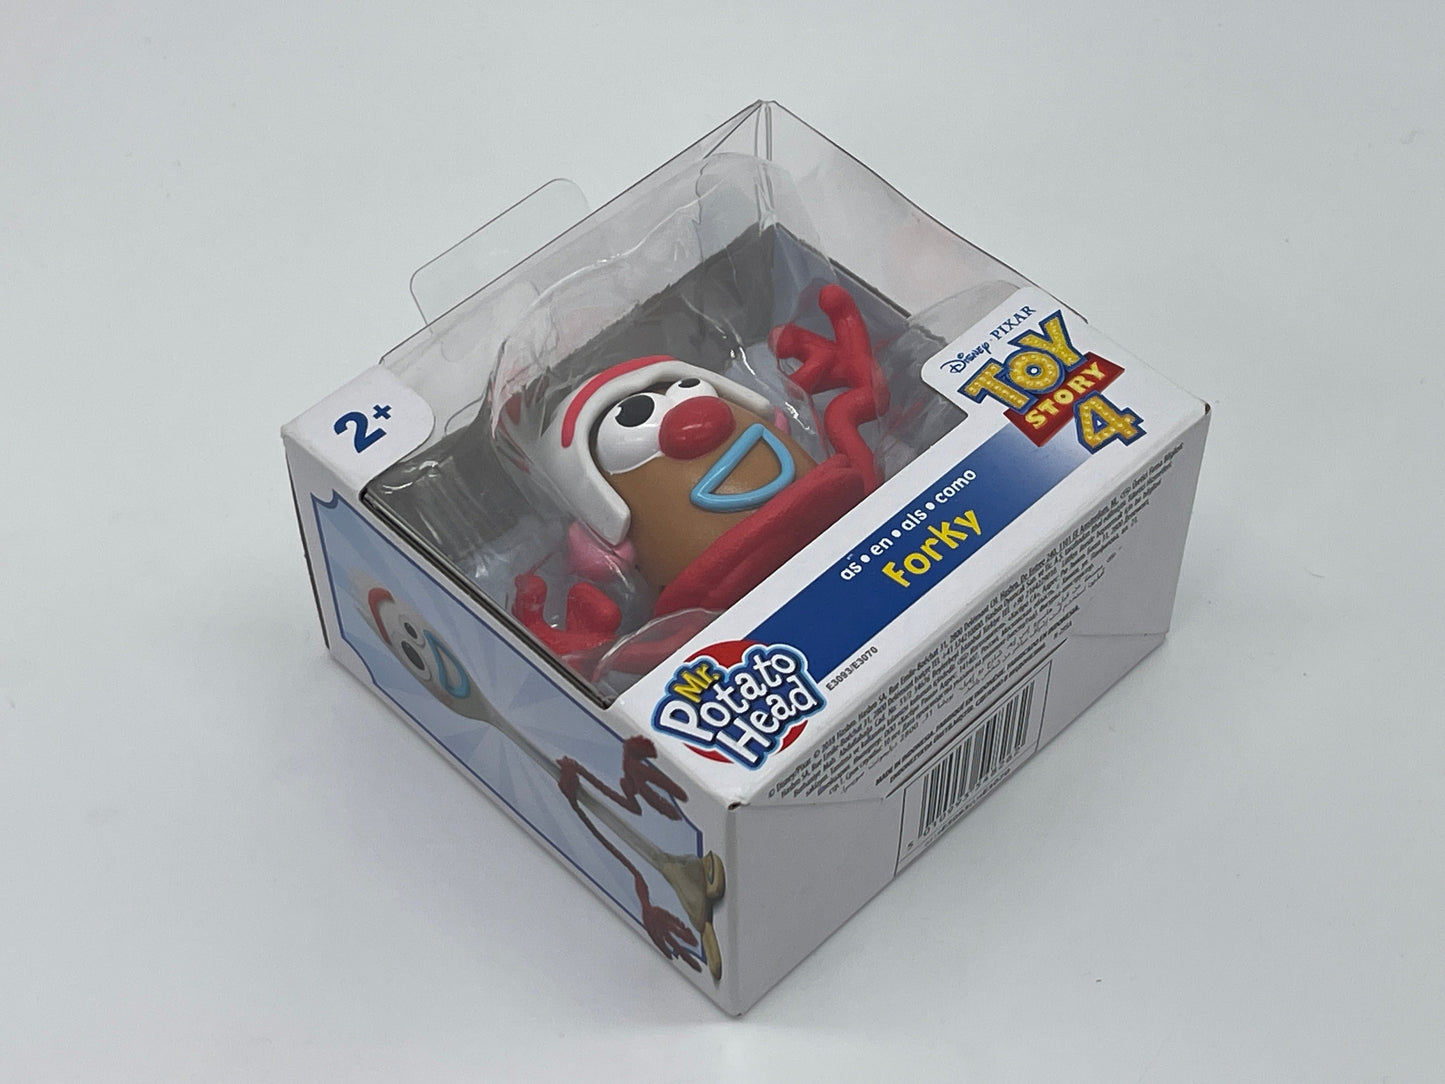 Mr. Potato Head - Forky Göffel - Figur Toy Story 4 Disney Pixar Playskool (2018)